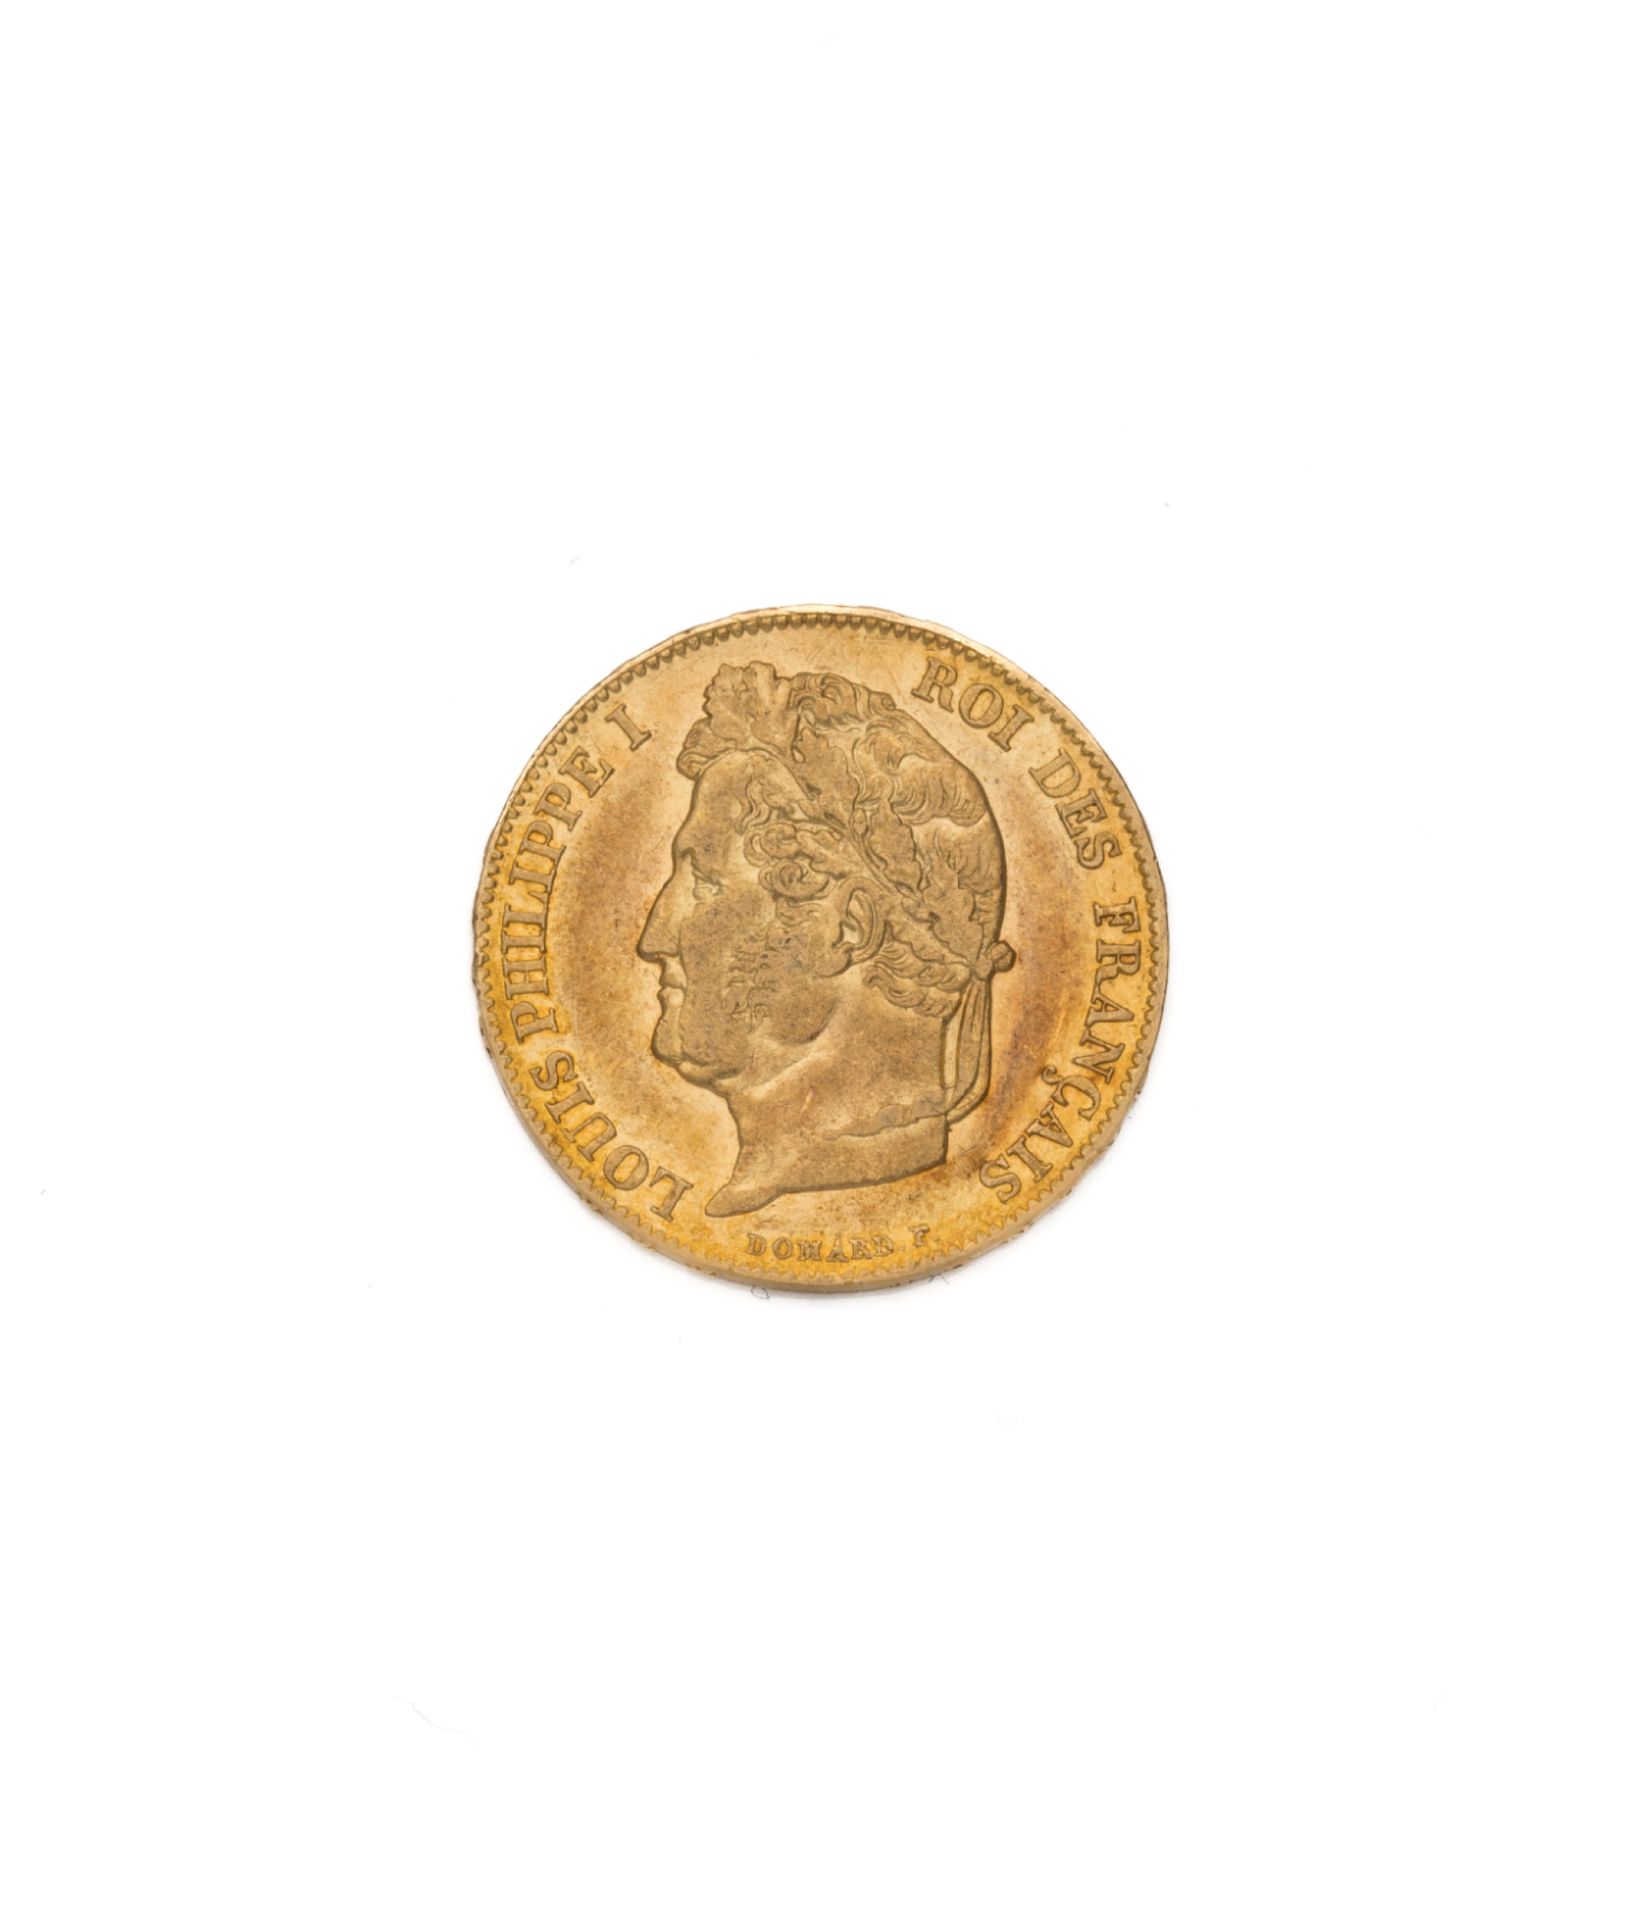 Null FRANKREICH - Louis-Philippe I.
20 Goldfranken, Kopf mit Lorbeerblatt. 1841 &hellip;